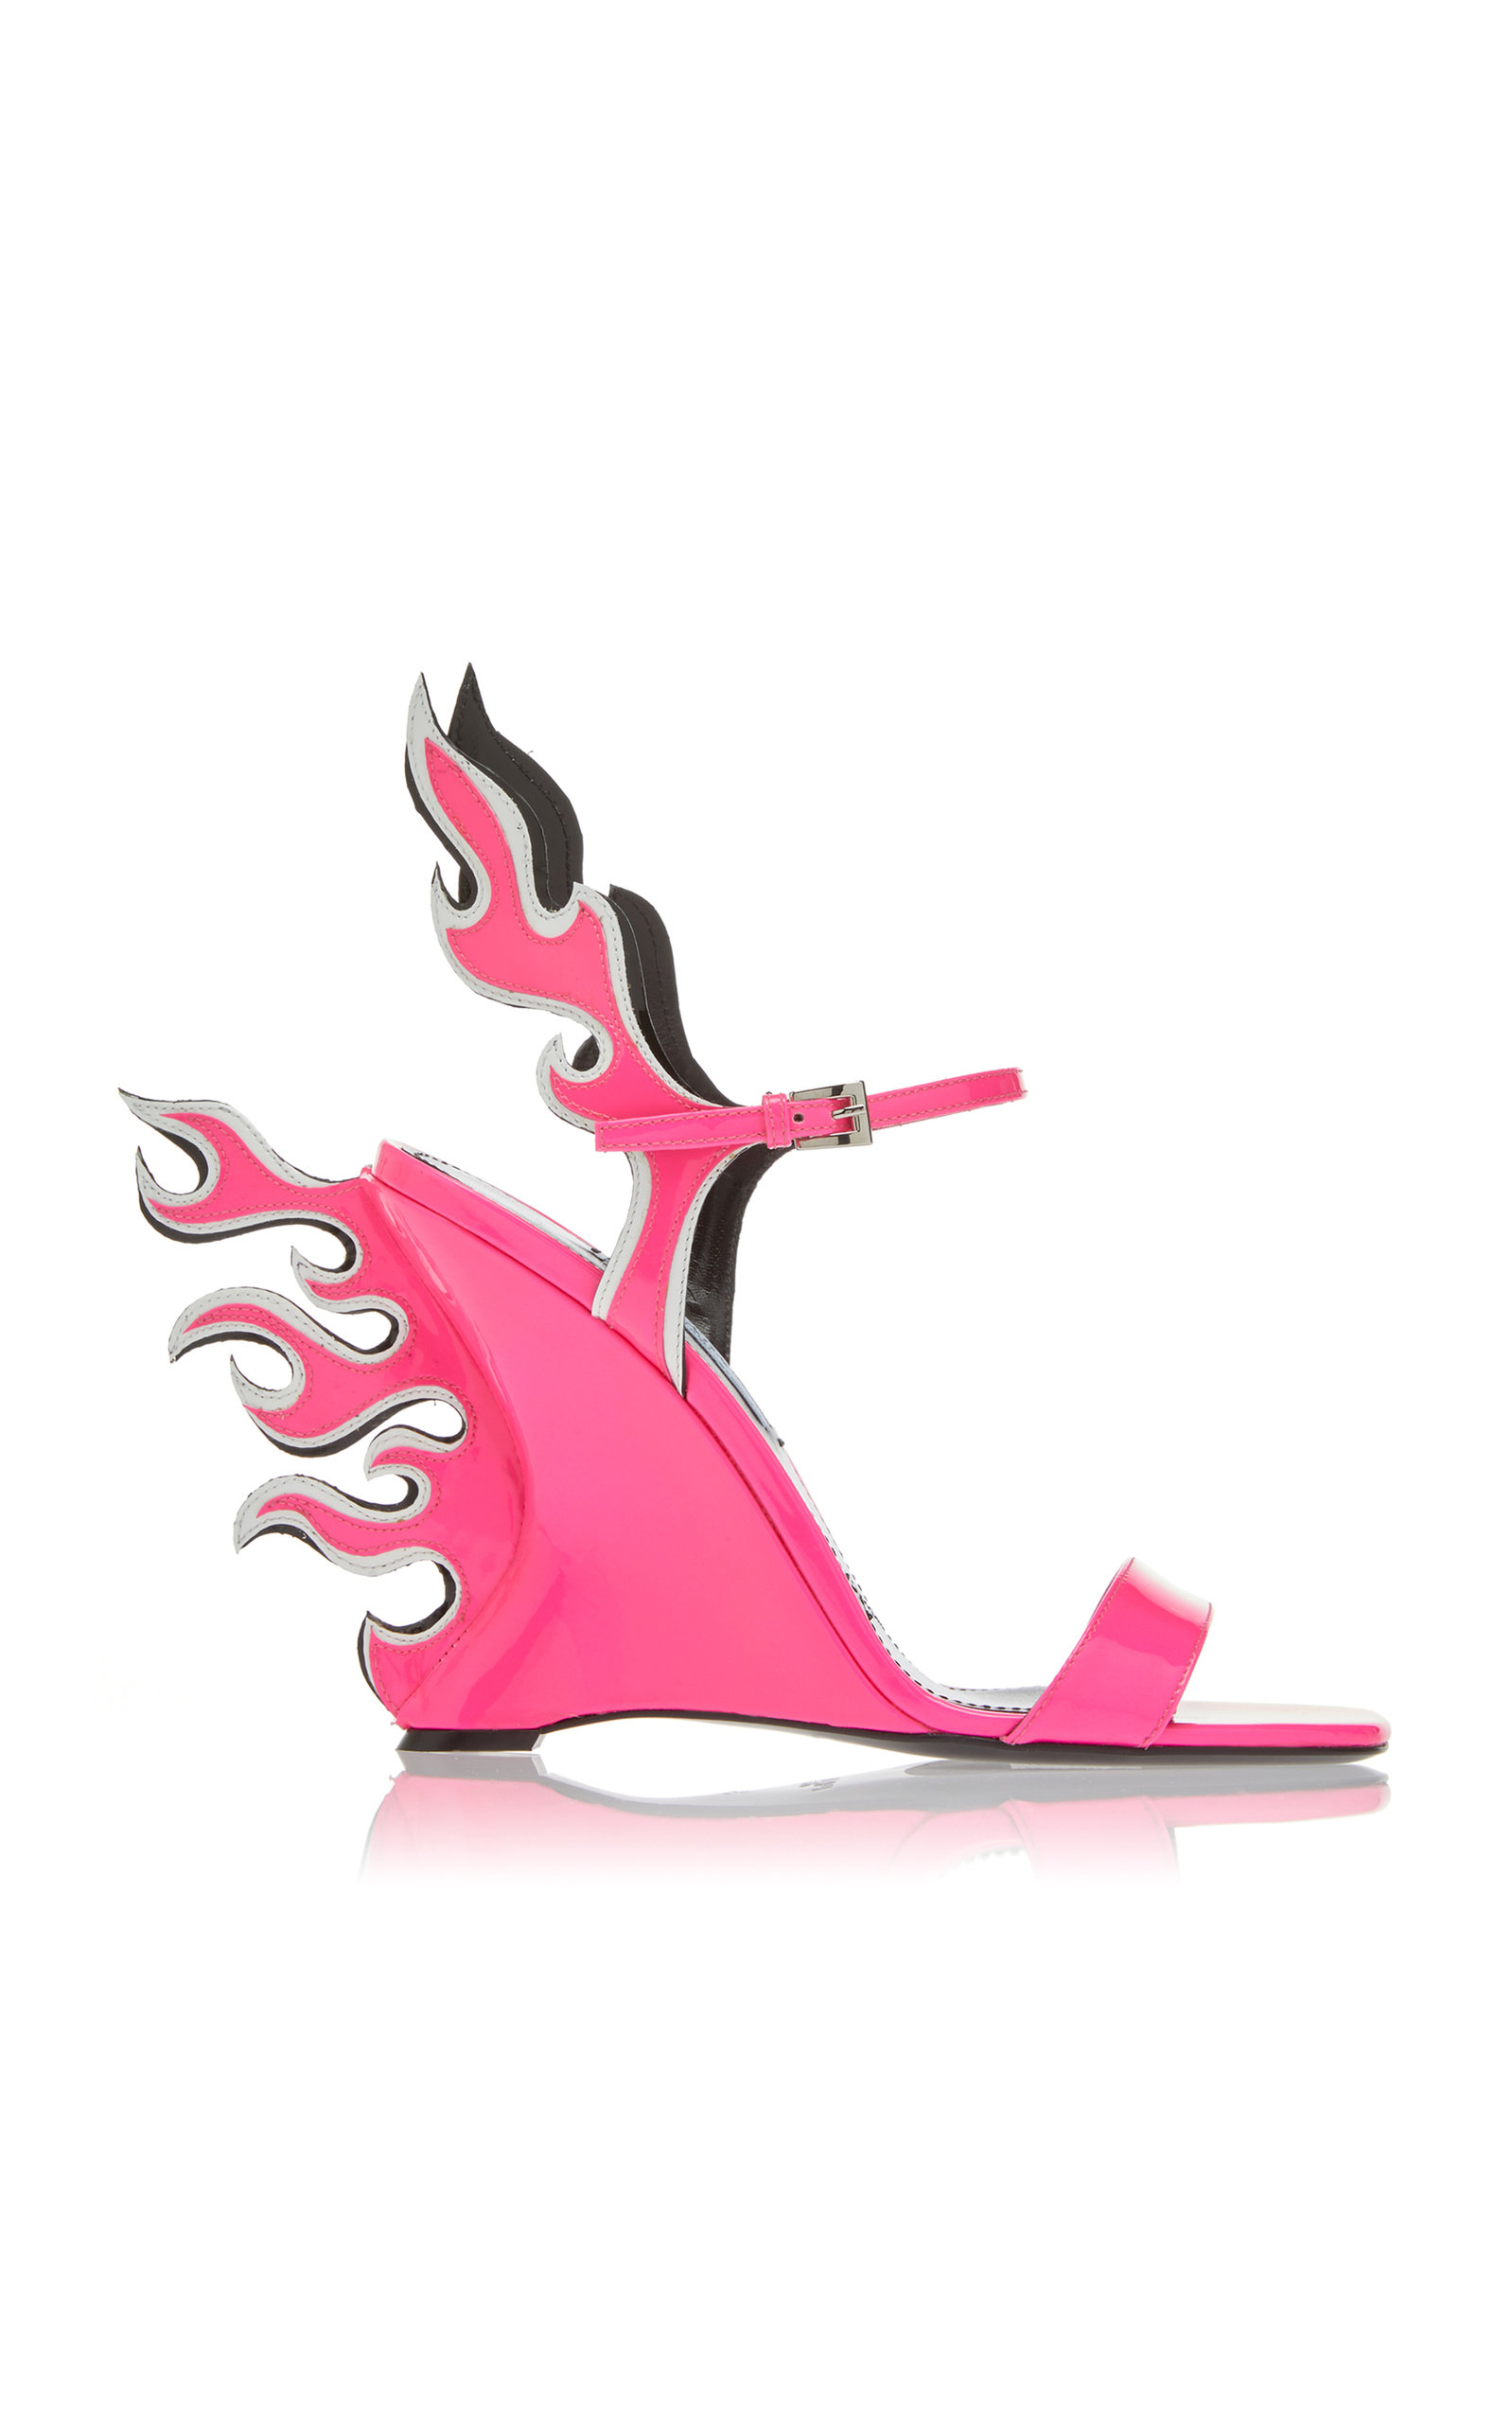 pink prada heels, OFF 75%,www 